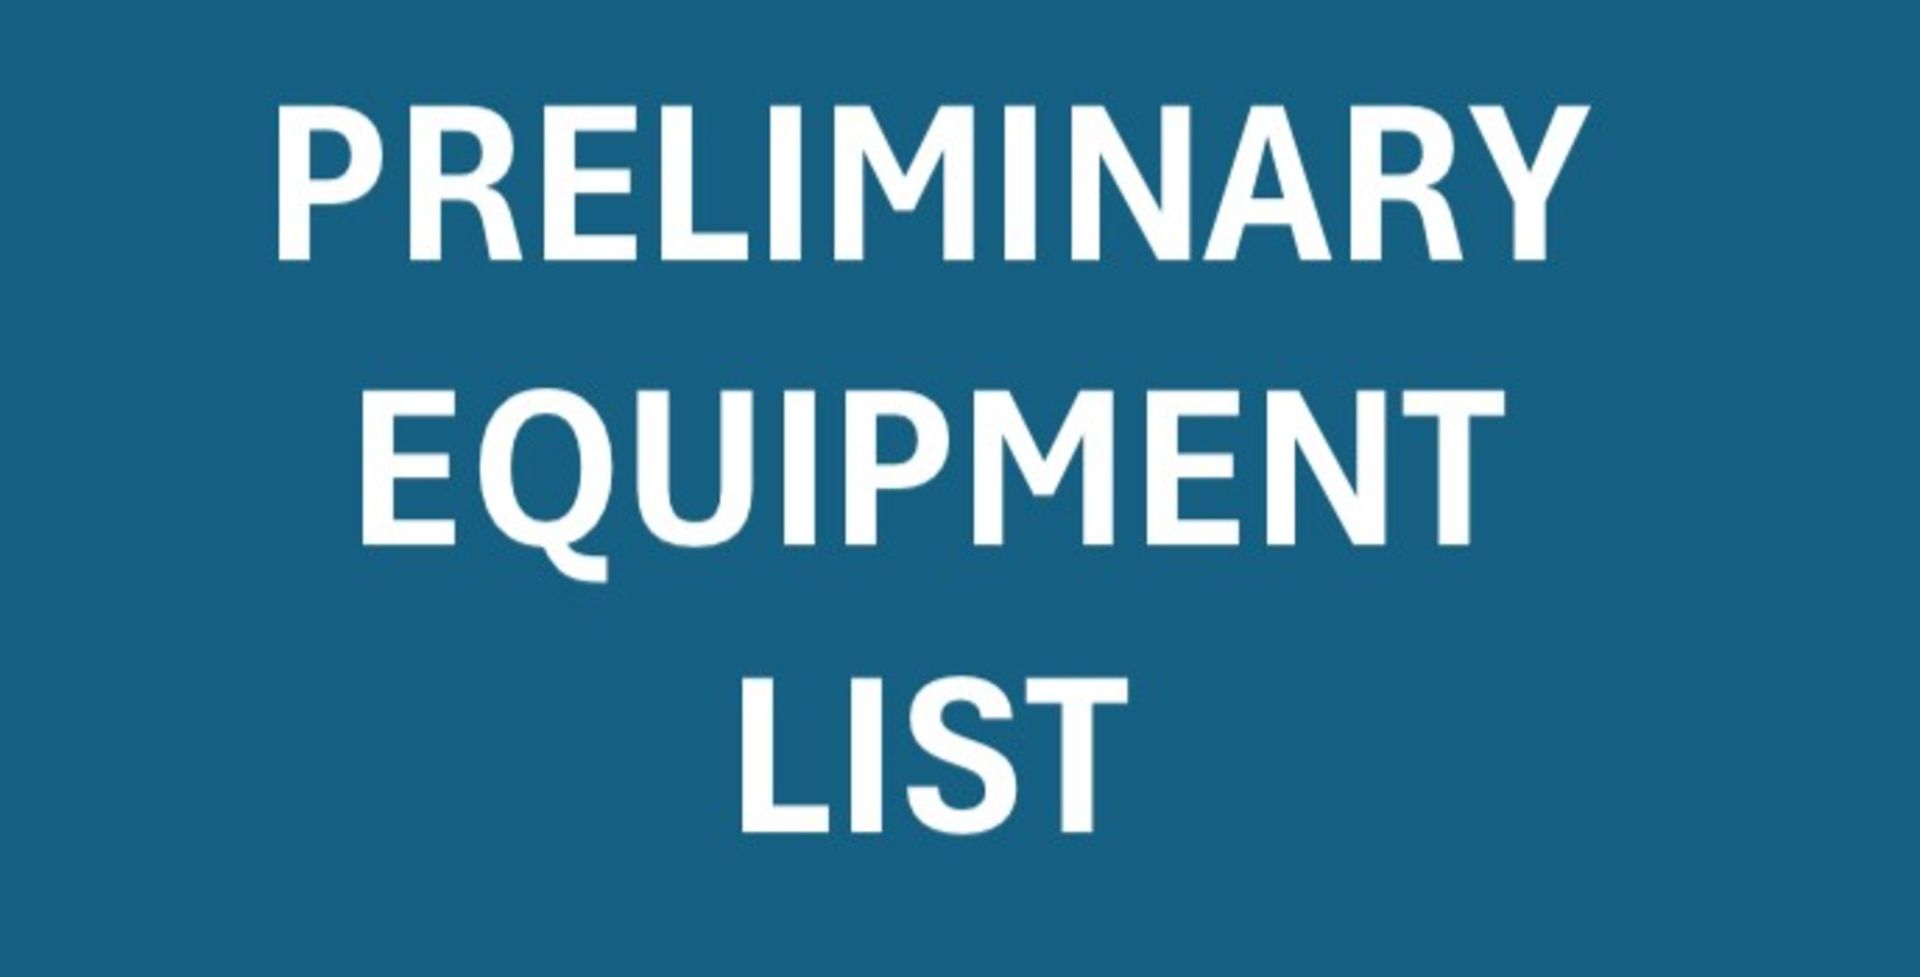 Preliminary Equipment List